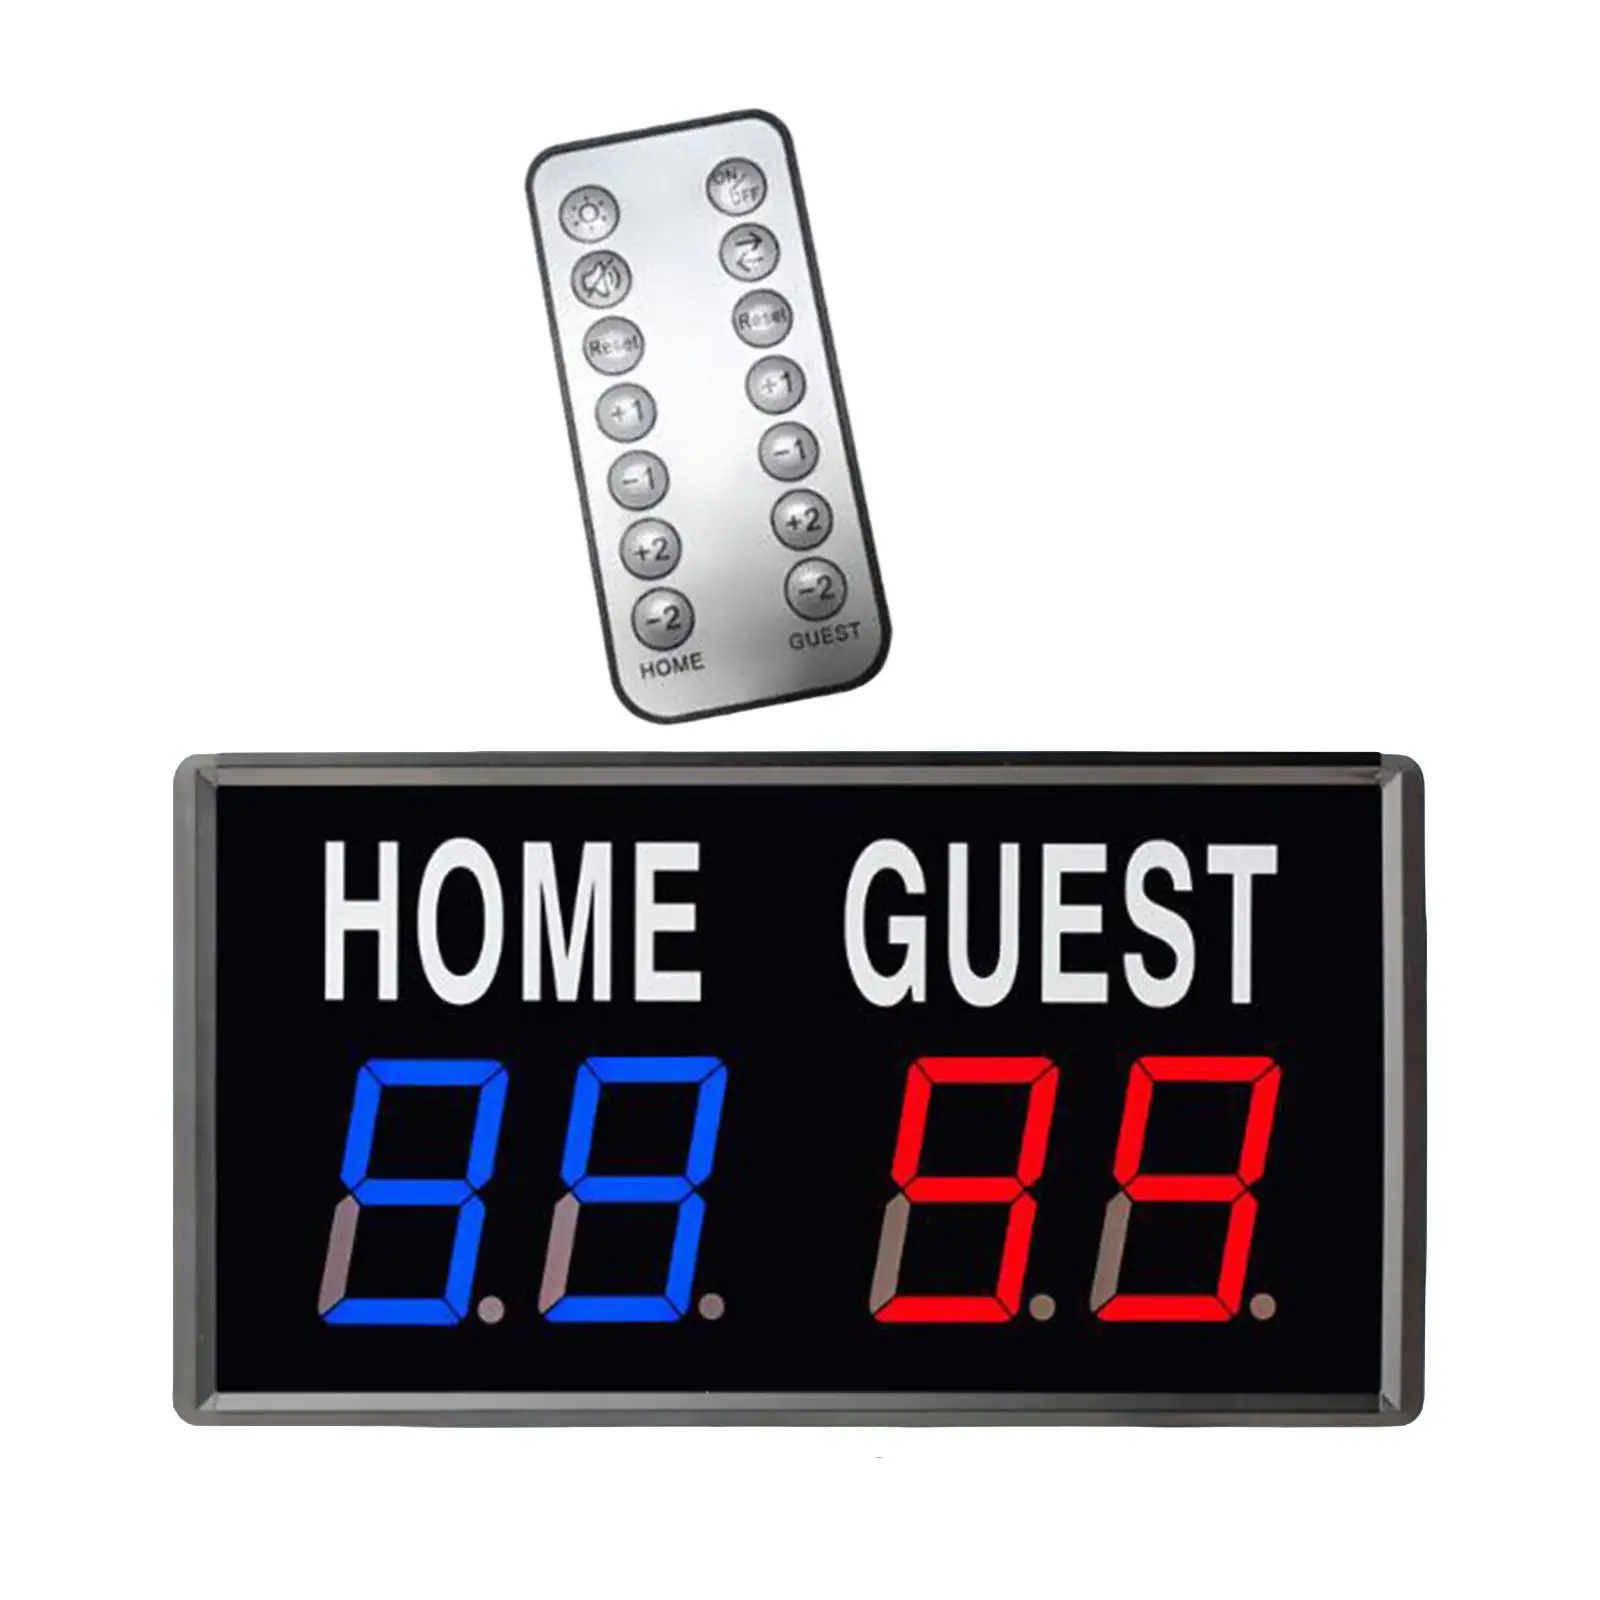 Digital Scoreboard LED Scoring Electronic Scoreboard Tabletop Score Keeper for Volleyball Badminton Indoor Games Soccer Sports